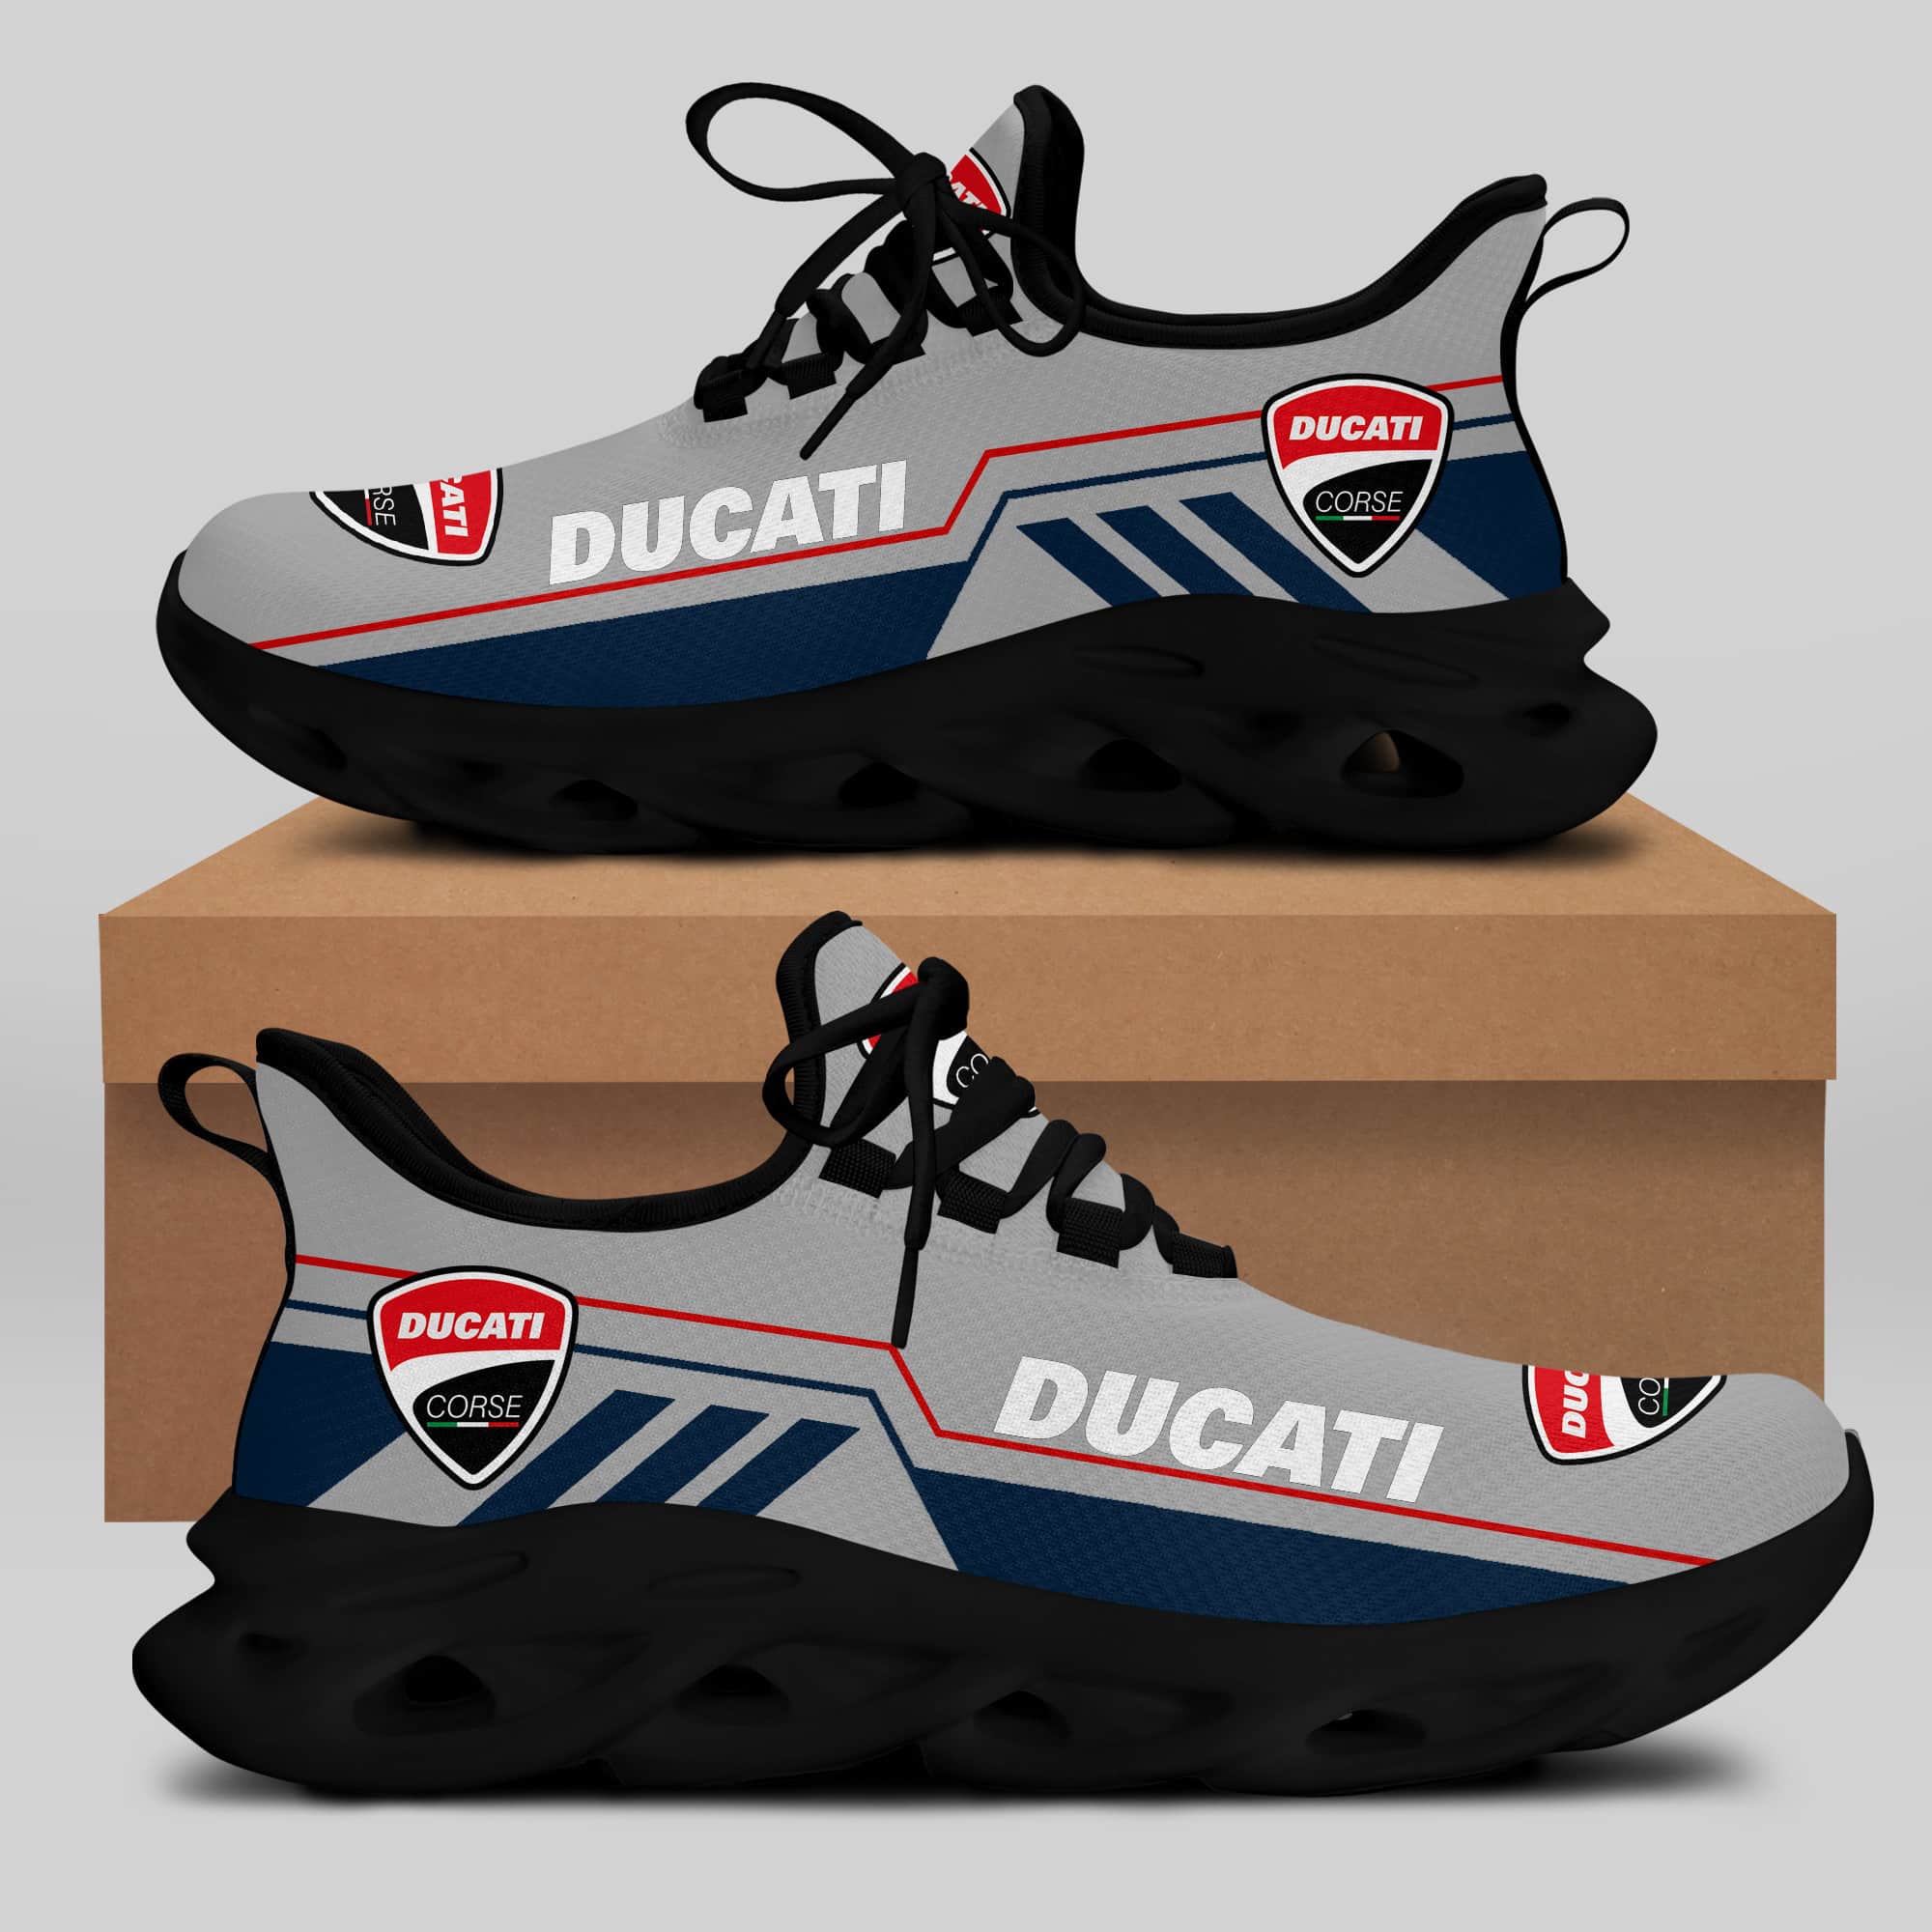 Ducati Racing Running Shoes Max Soul Shoes Sneakers Ver 25 1